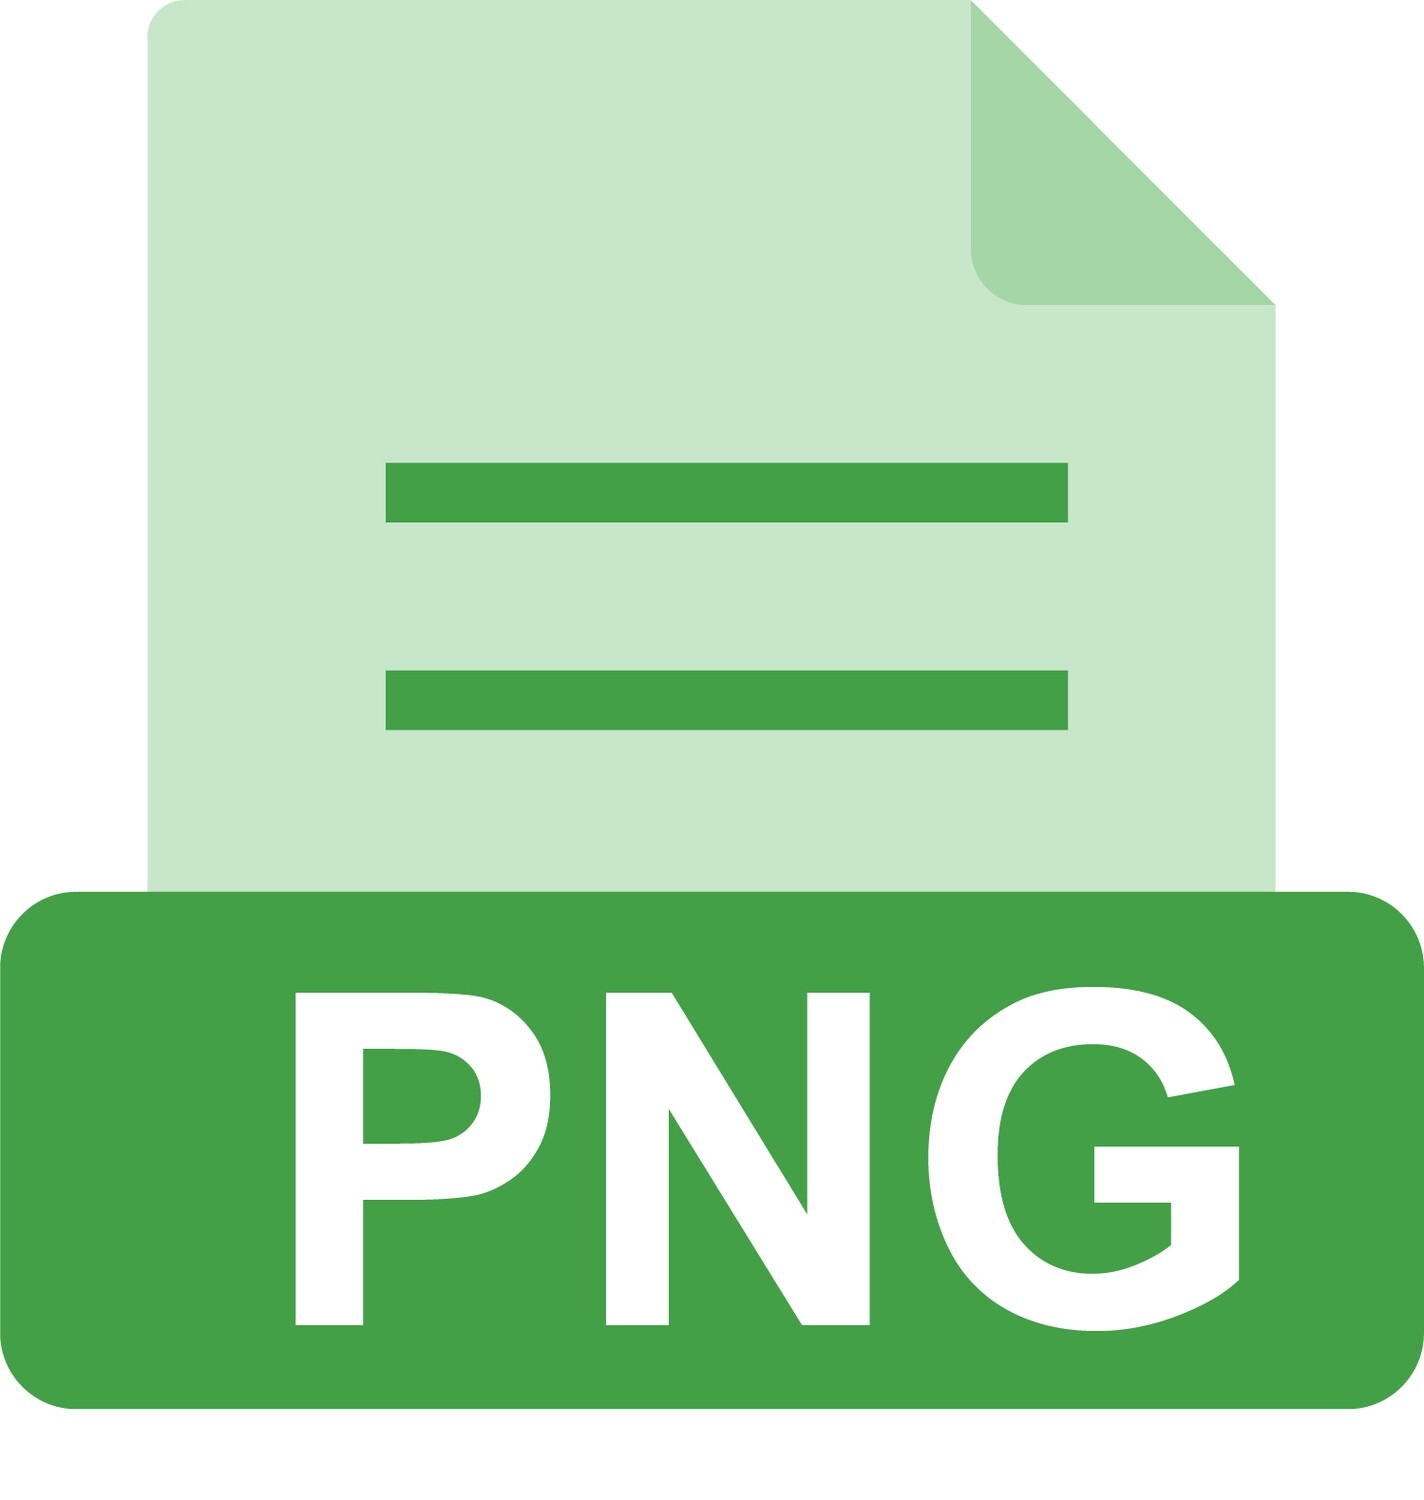 E-File: PNG, Geologist Pennsylvania